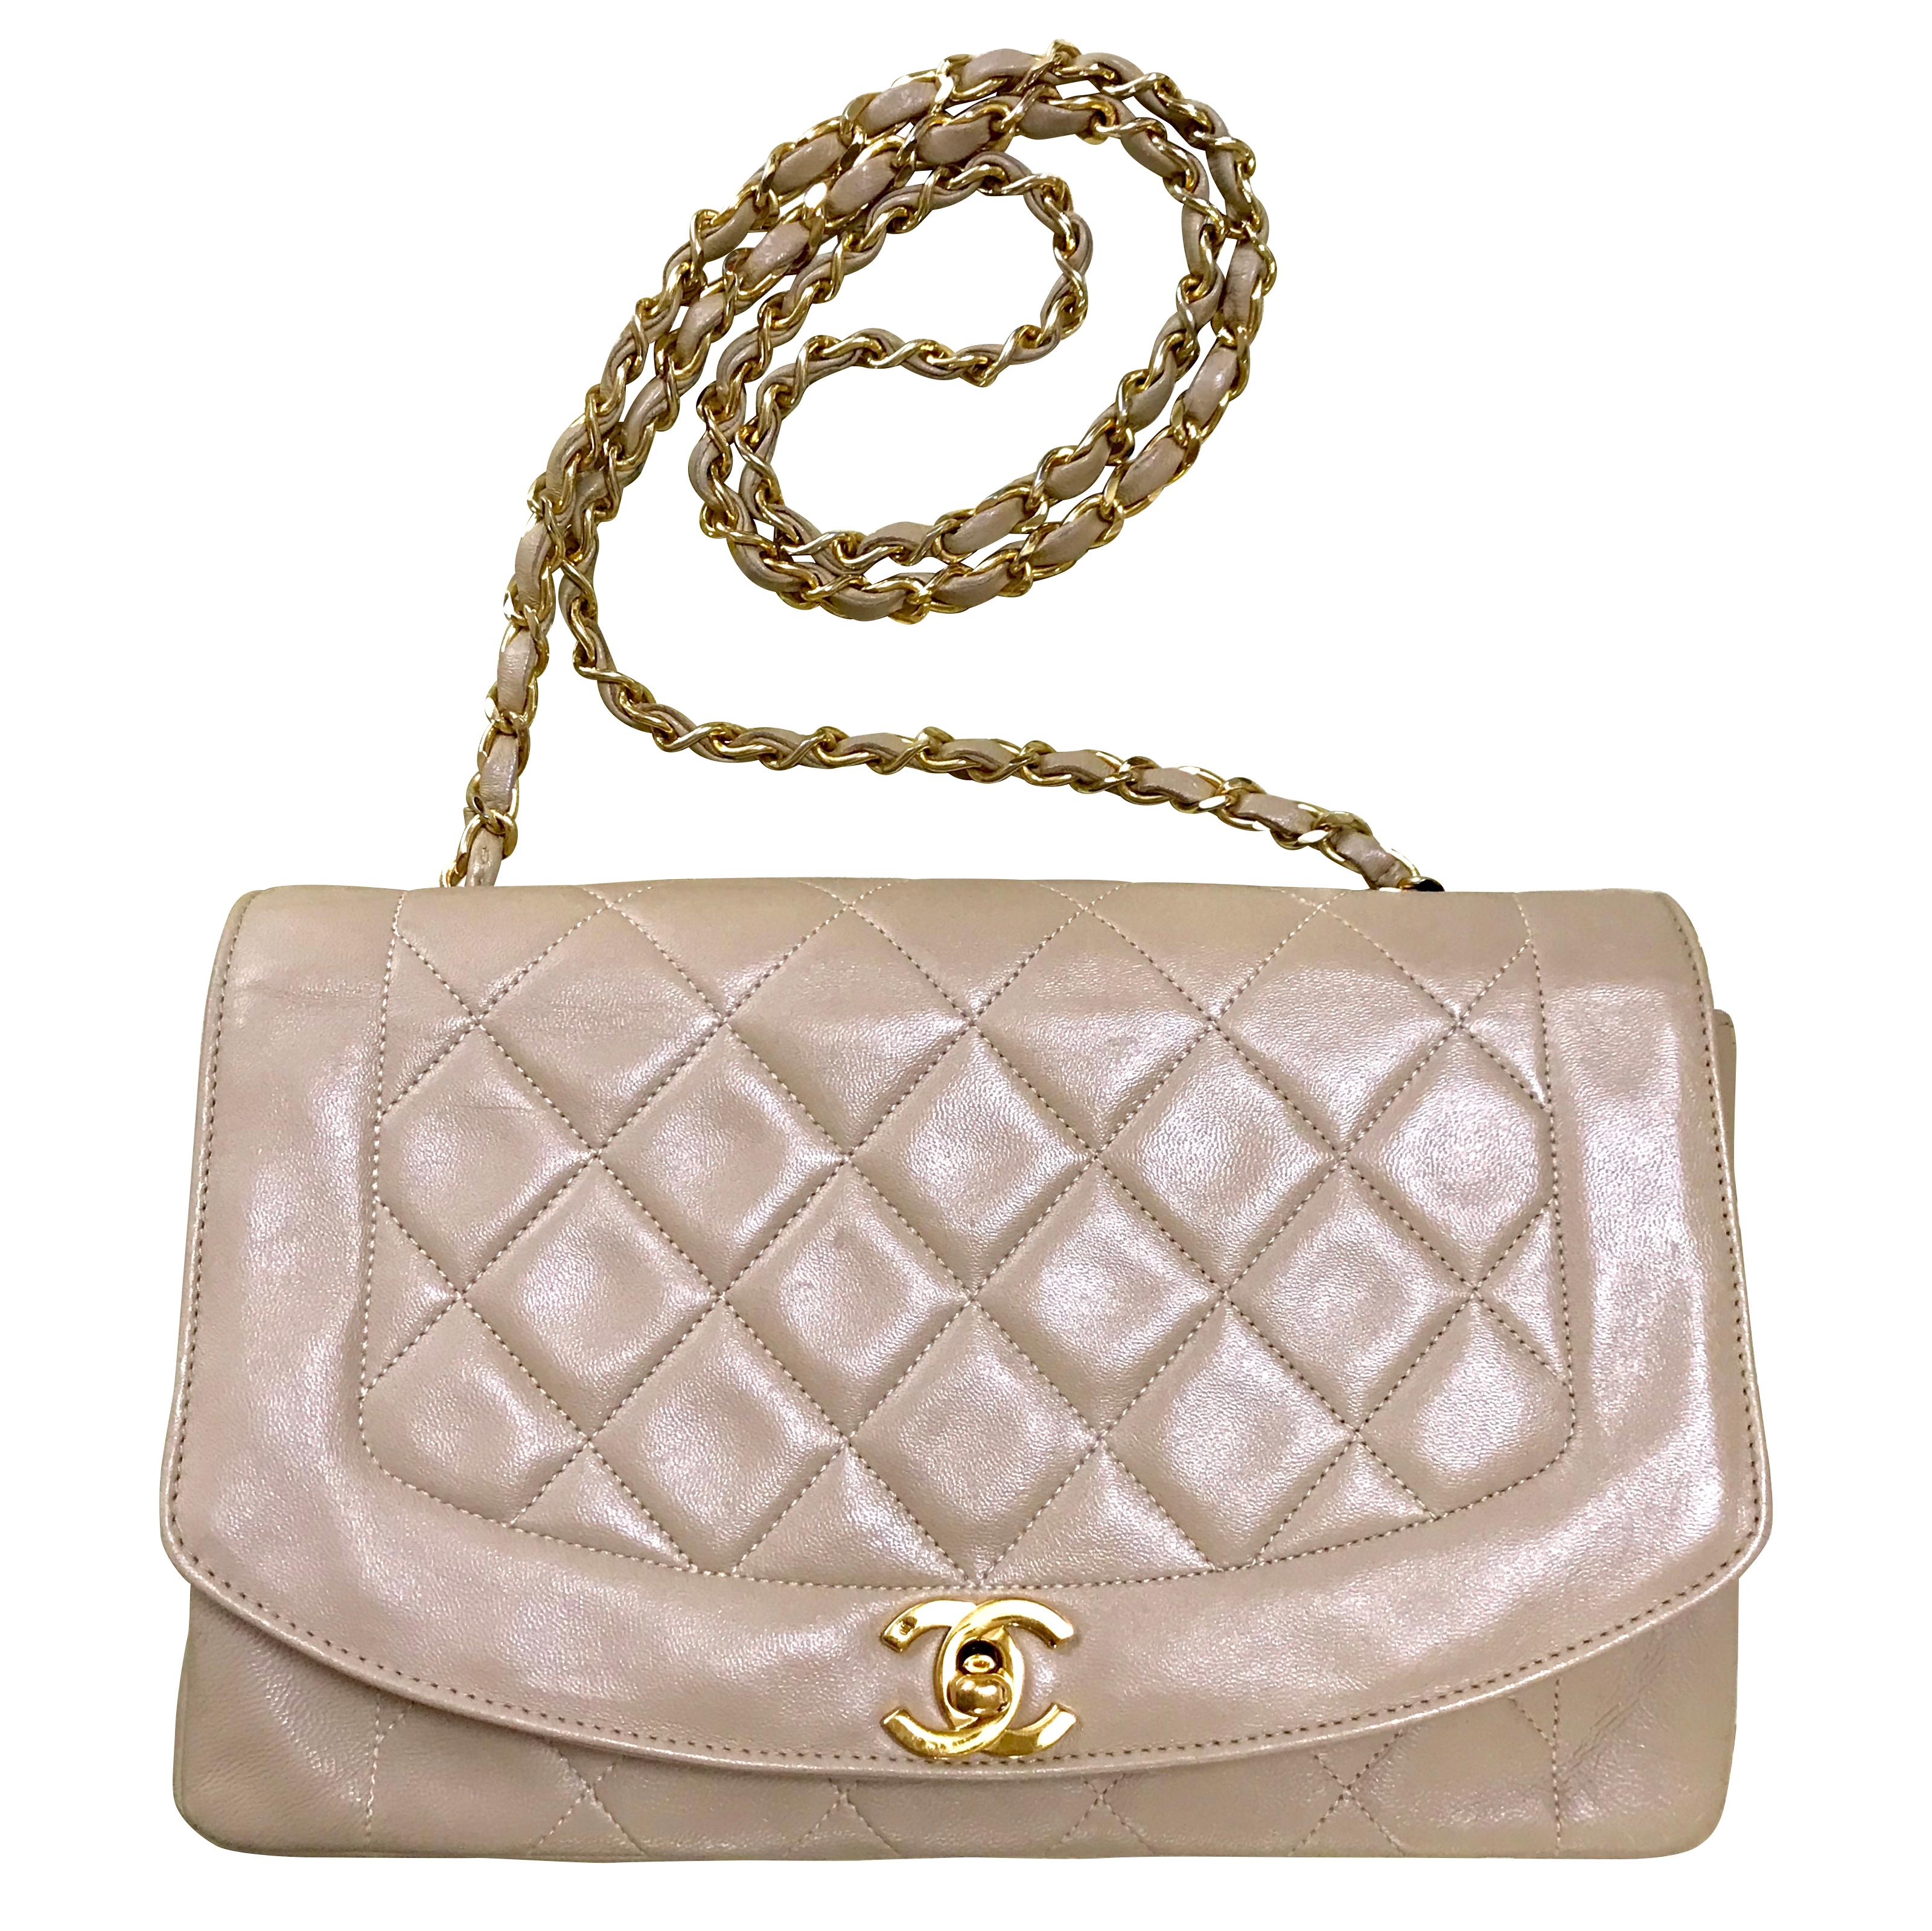 Chanel Vintage beige lambskin flap chain Diana 2.55 shoulder bag / purse 